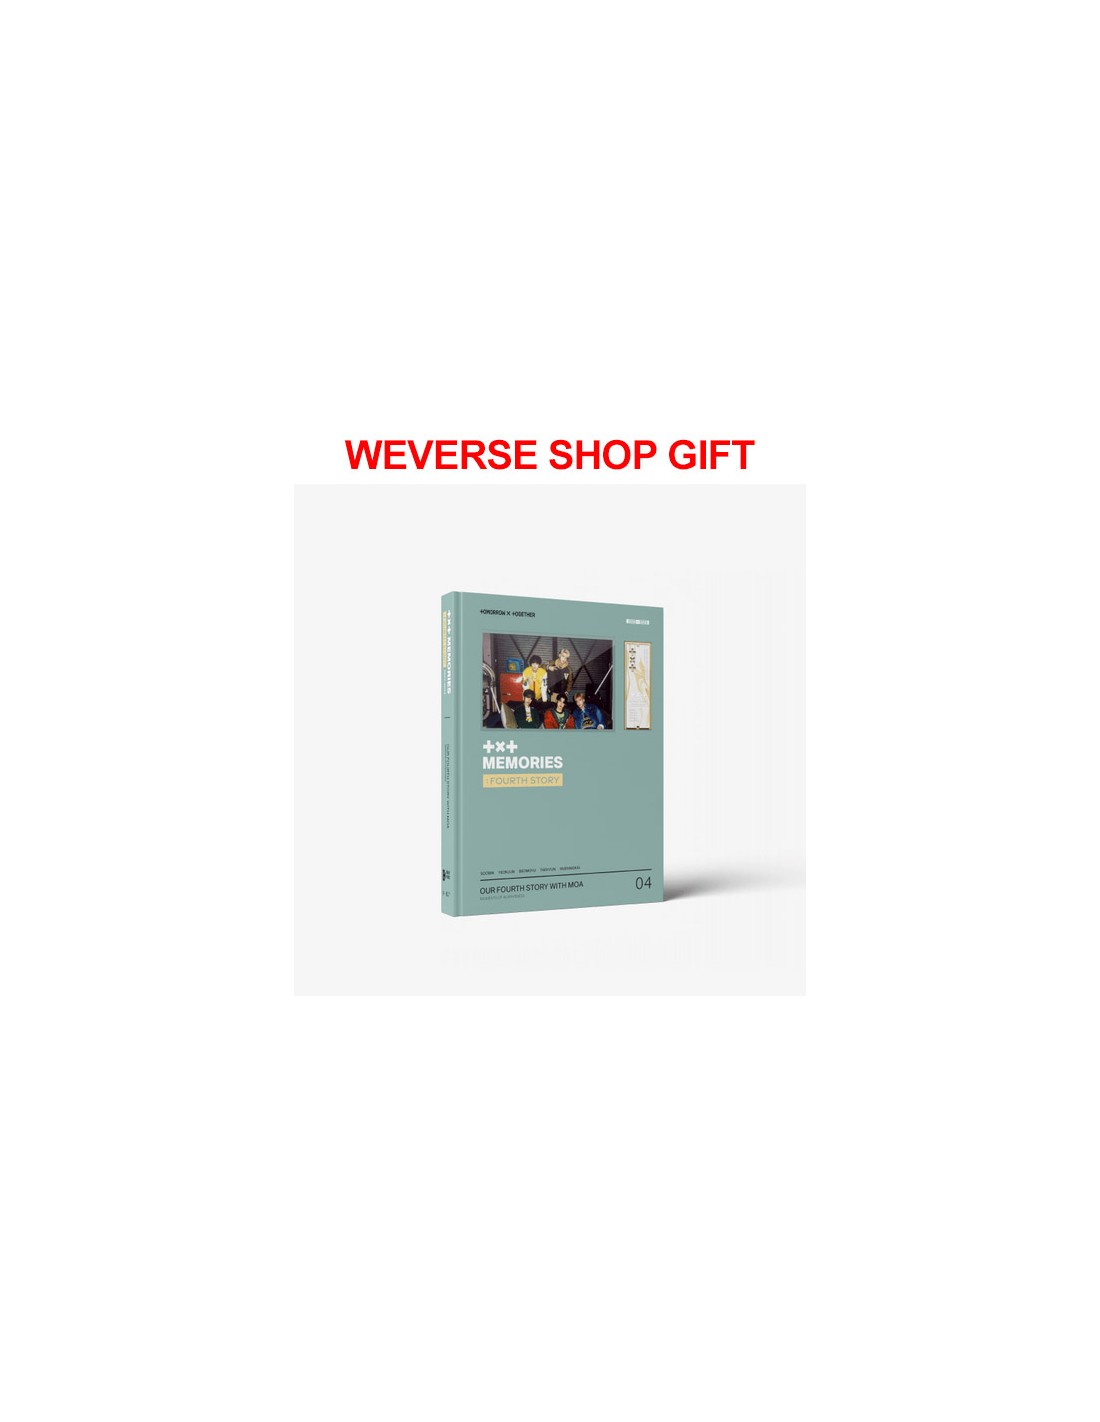 [Weverse Shop Gift] TXT MEMORIES : FOURTH STORY DIGITAL CODE kpoptown.com